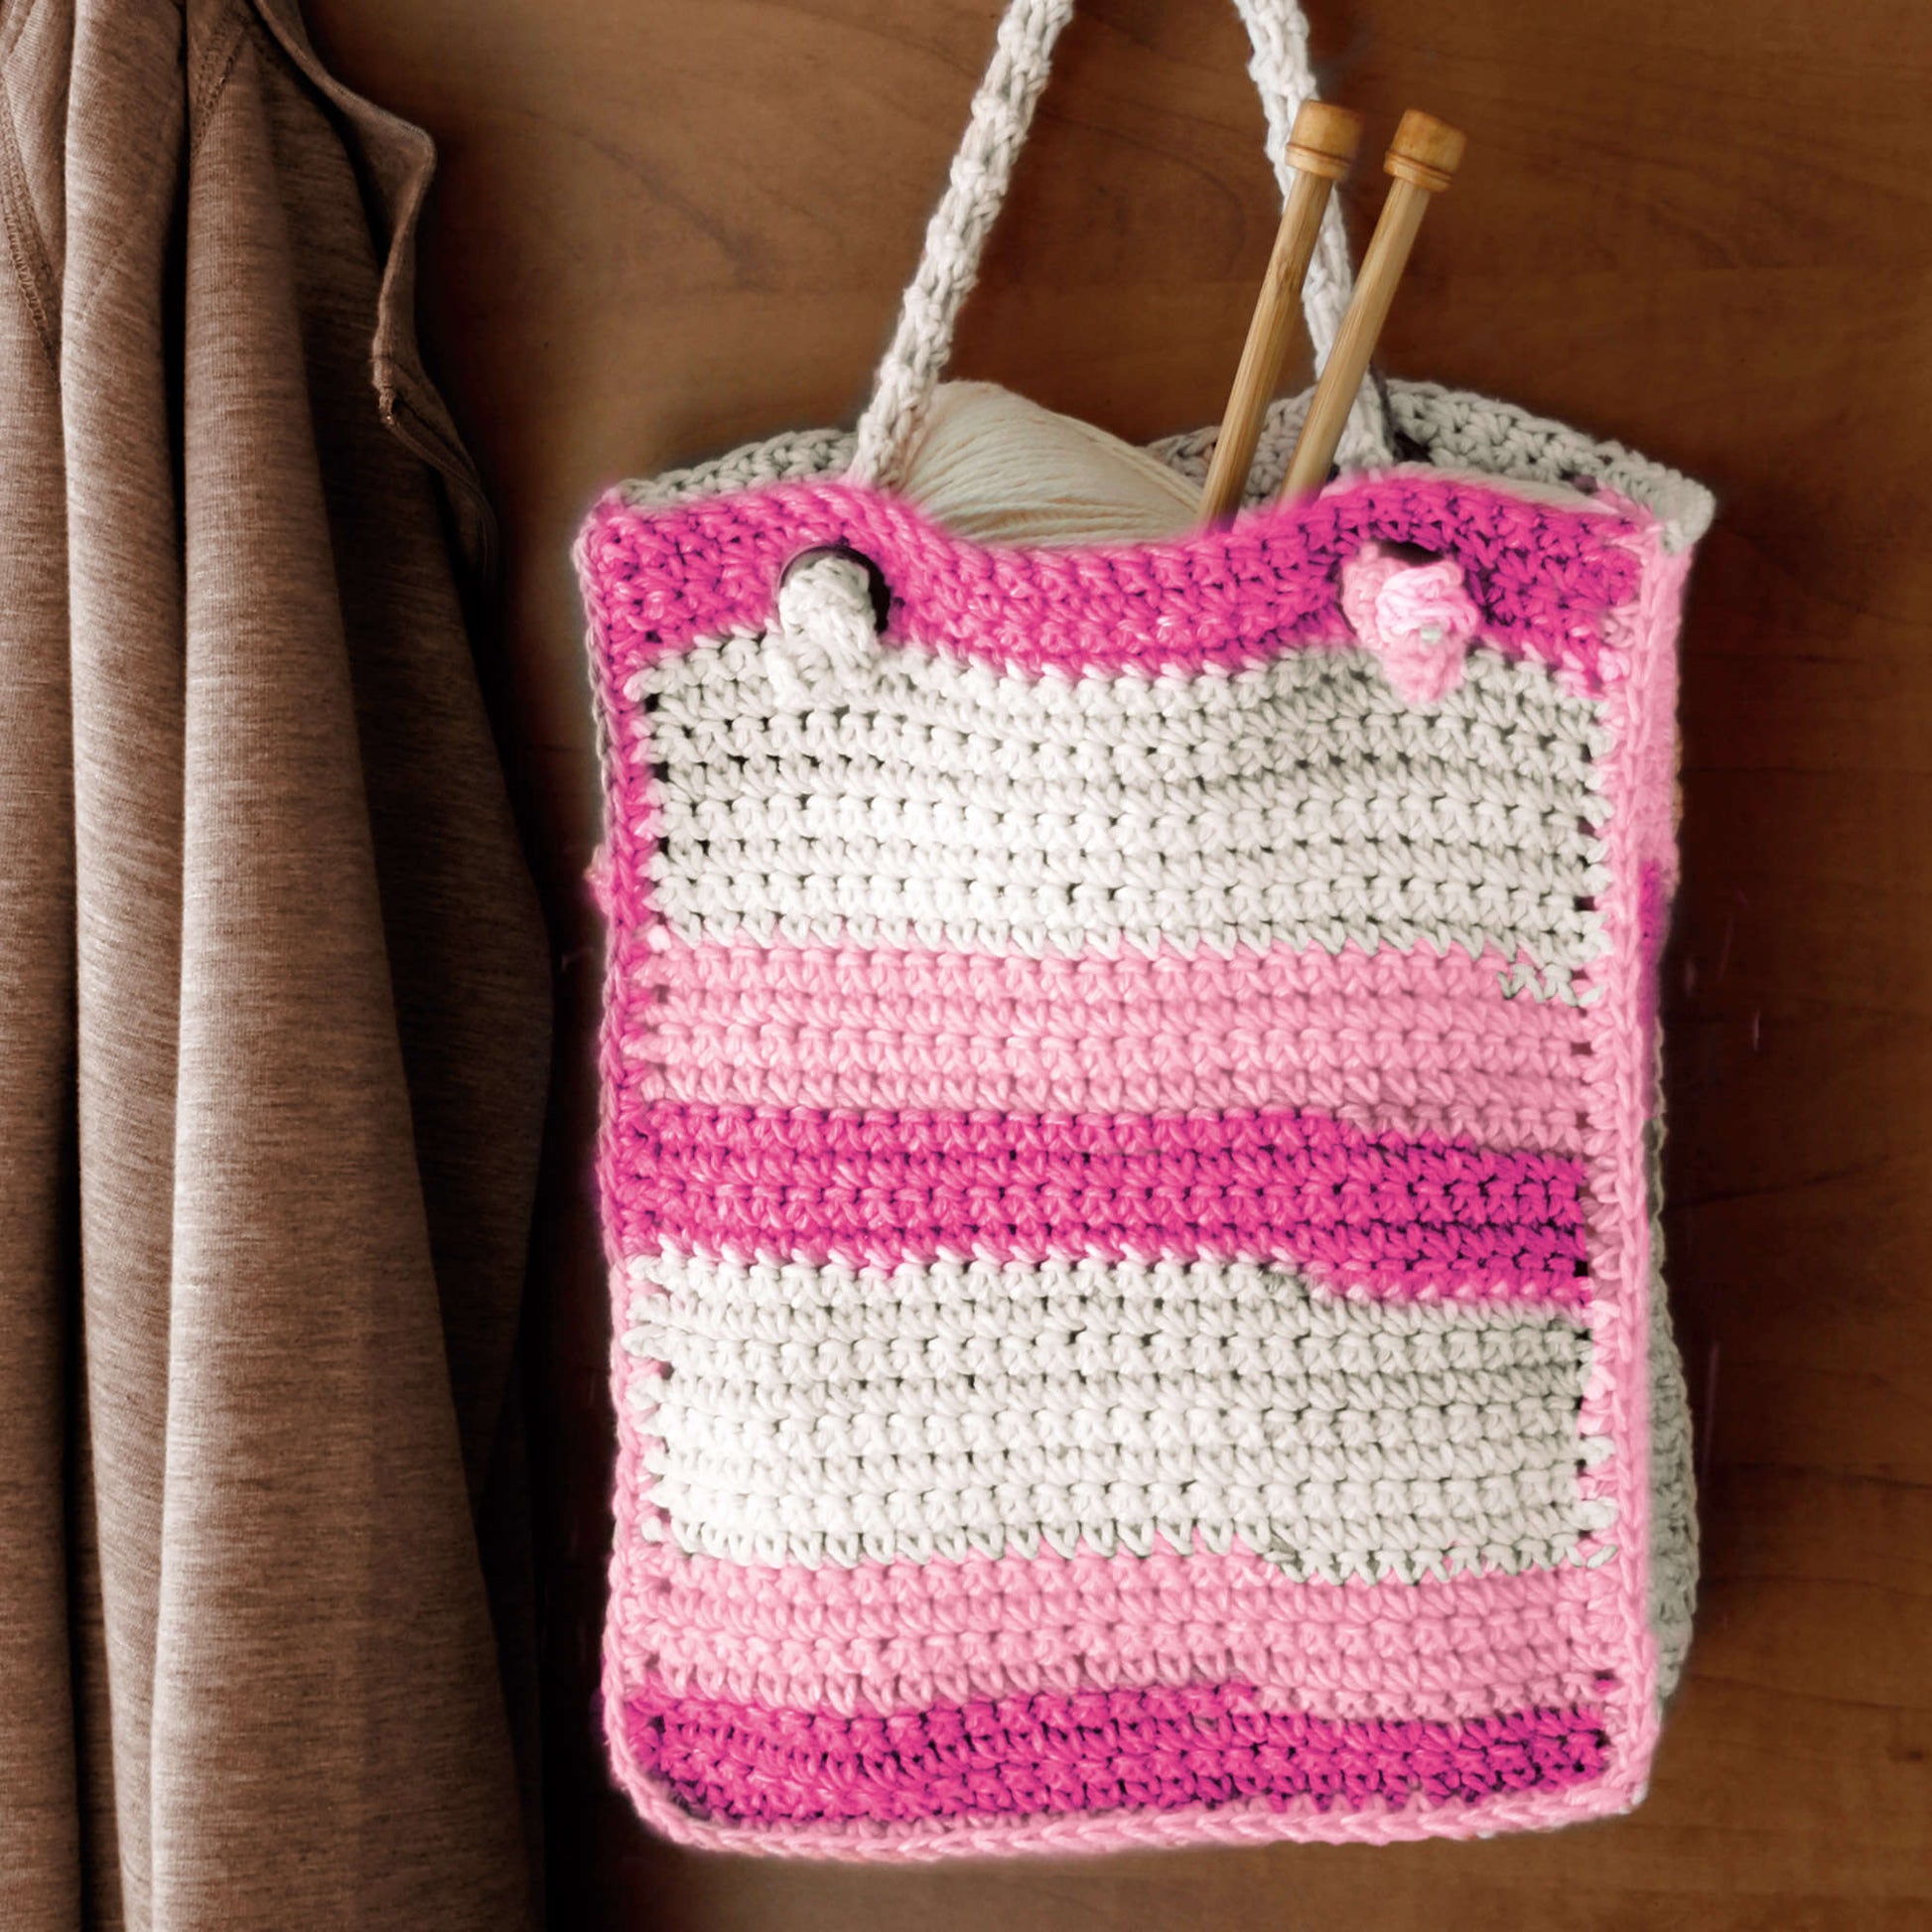 Bernat Bag Crochet Bag made in Bernat Handicrafter Cotton yarn